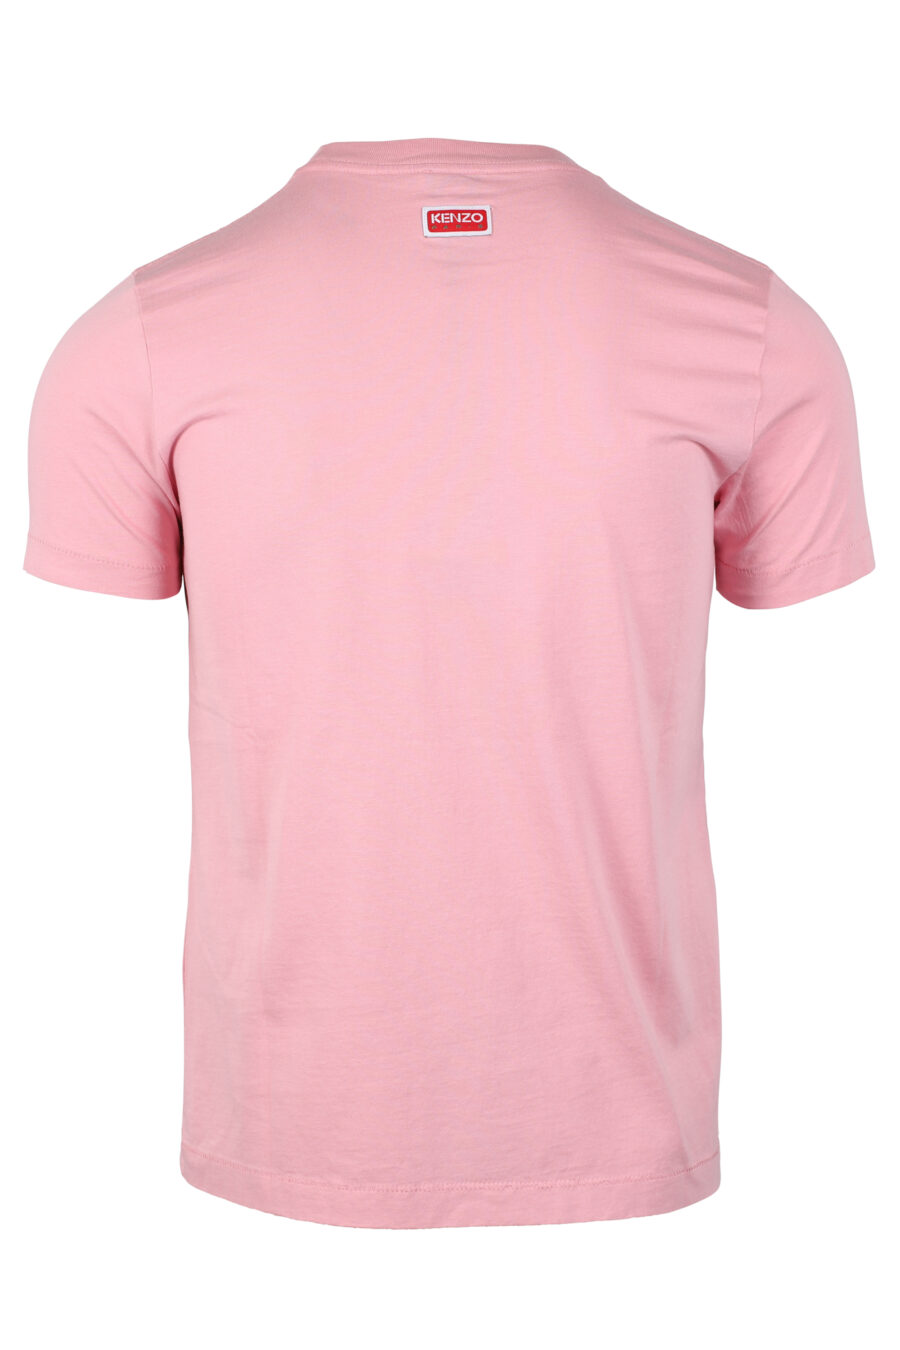 Camiseta rosa con maxilogo flor naranja - IMG 4640